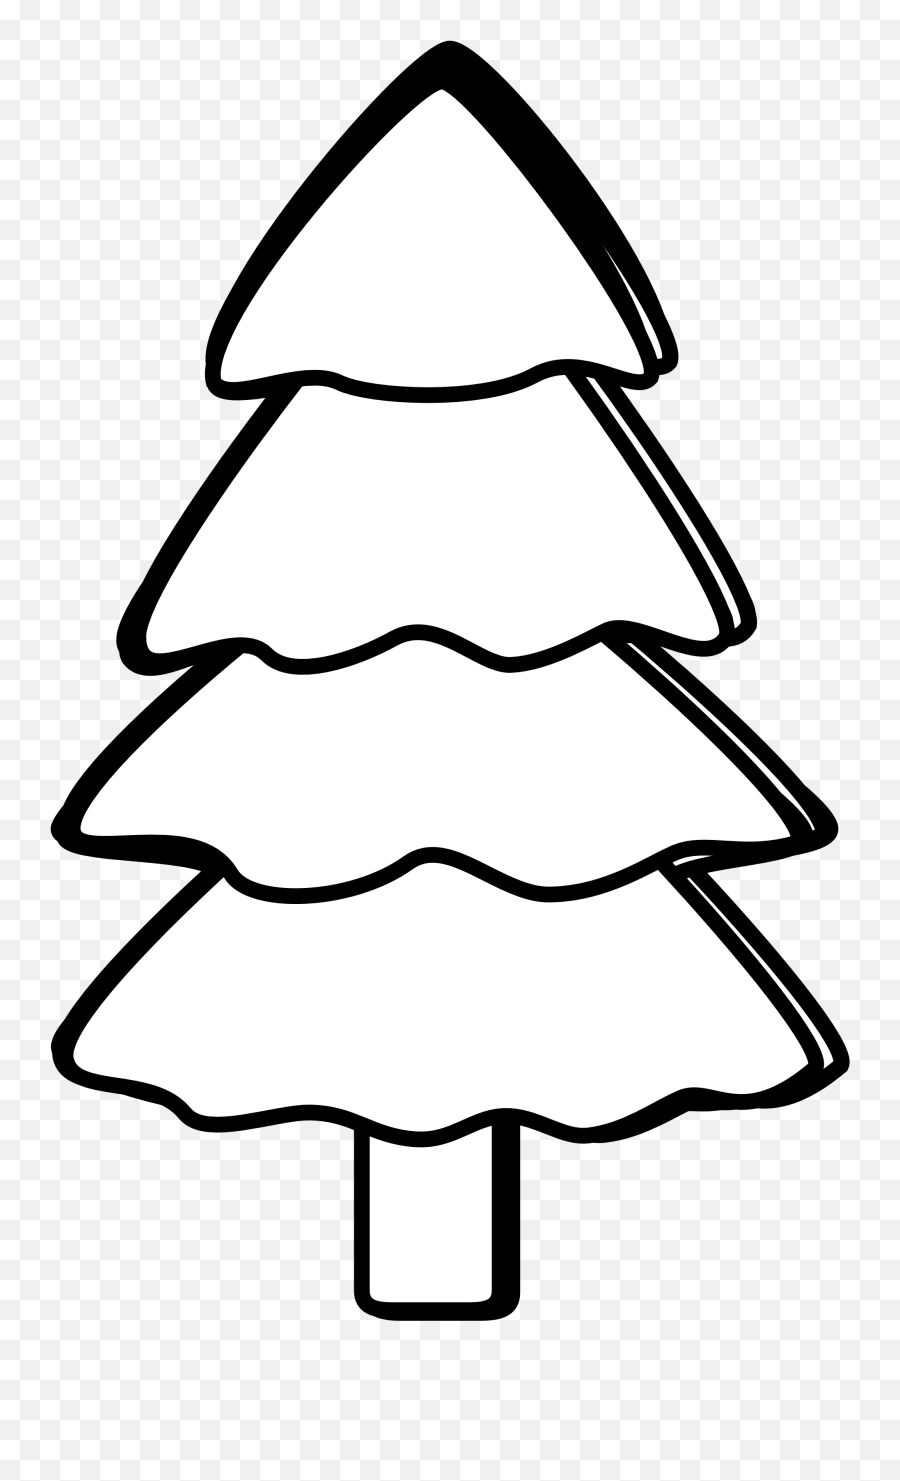 Pine Tree Clip Art Black And White 2 - Black And White Clipart Images Of Christmas Tree Emoji,Pine Tree Emoji